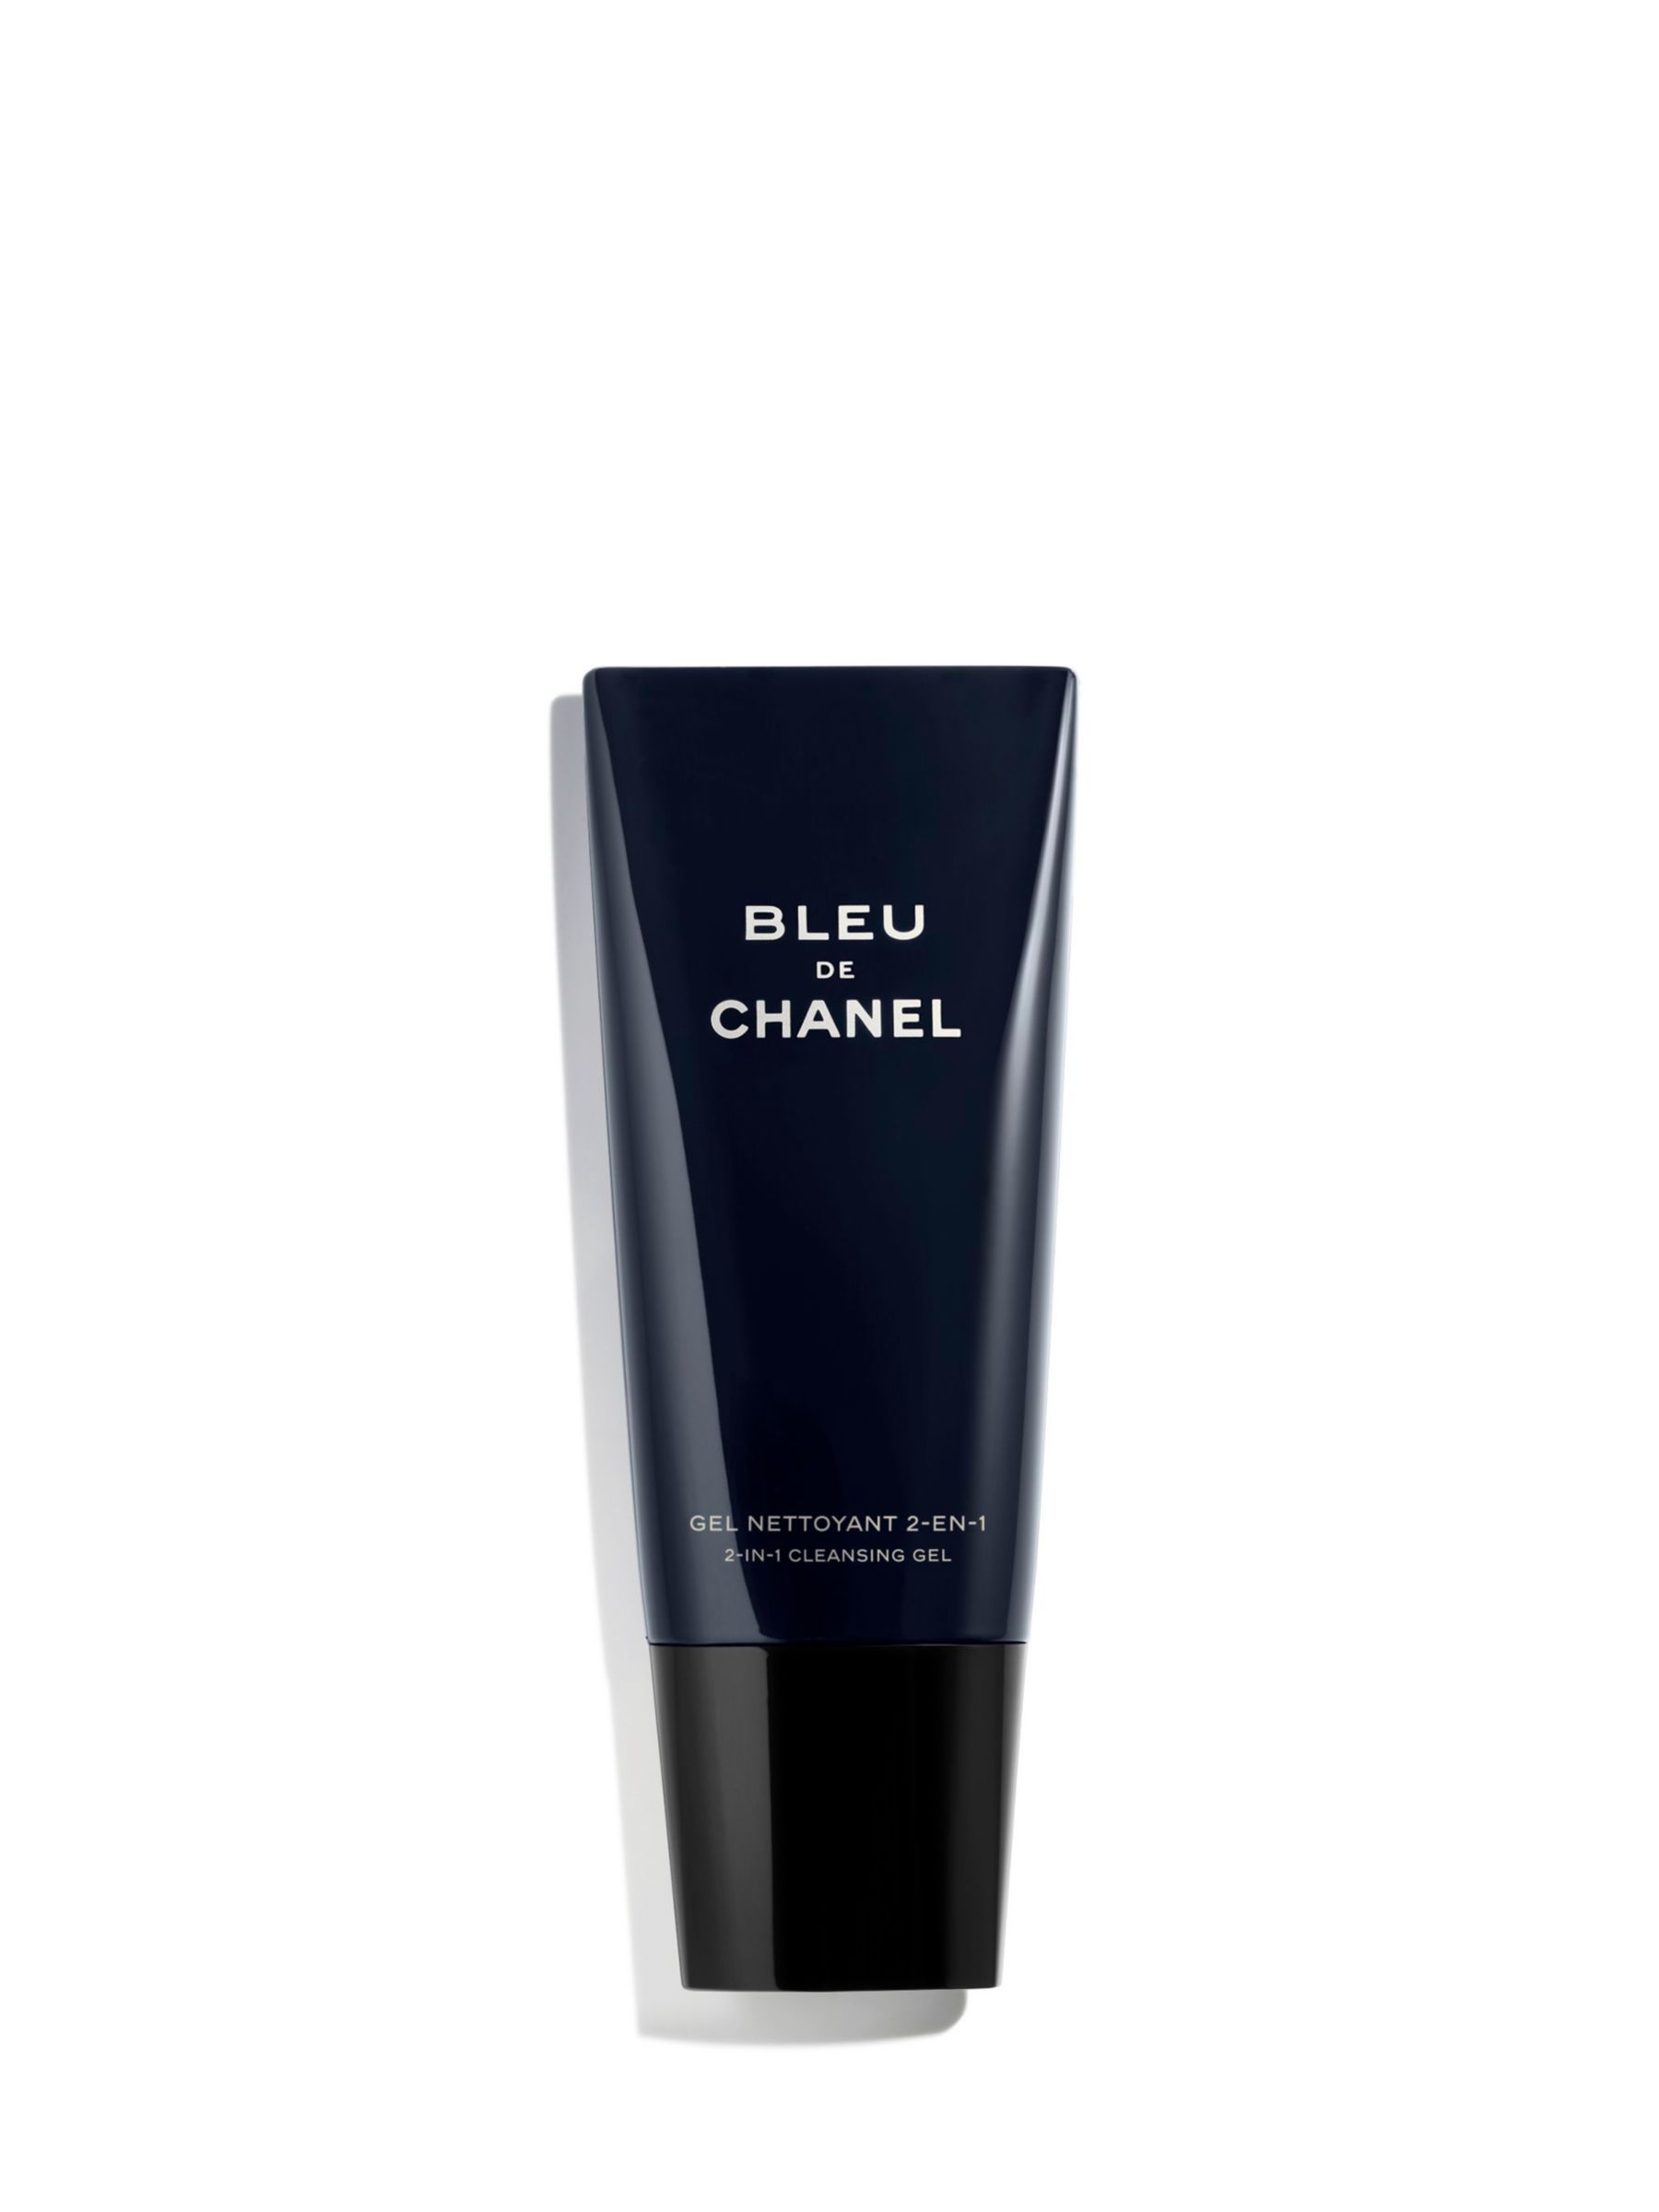 CHANEL Bleu De CHANEL 2-In-1 Cleansing Gel, 100ml at John Lewis &  Partners